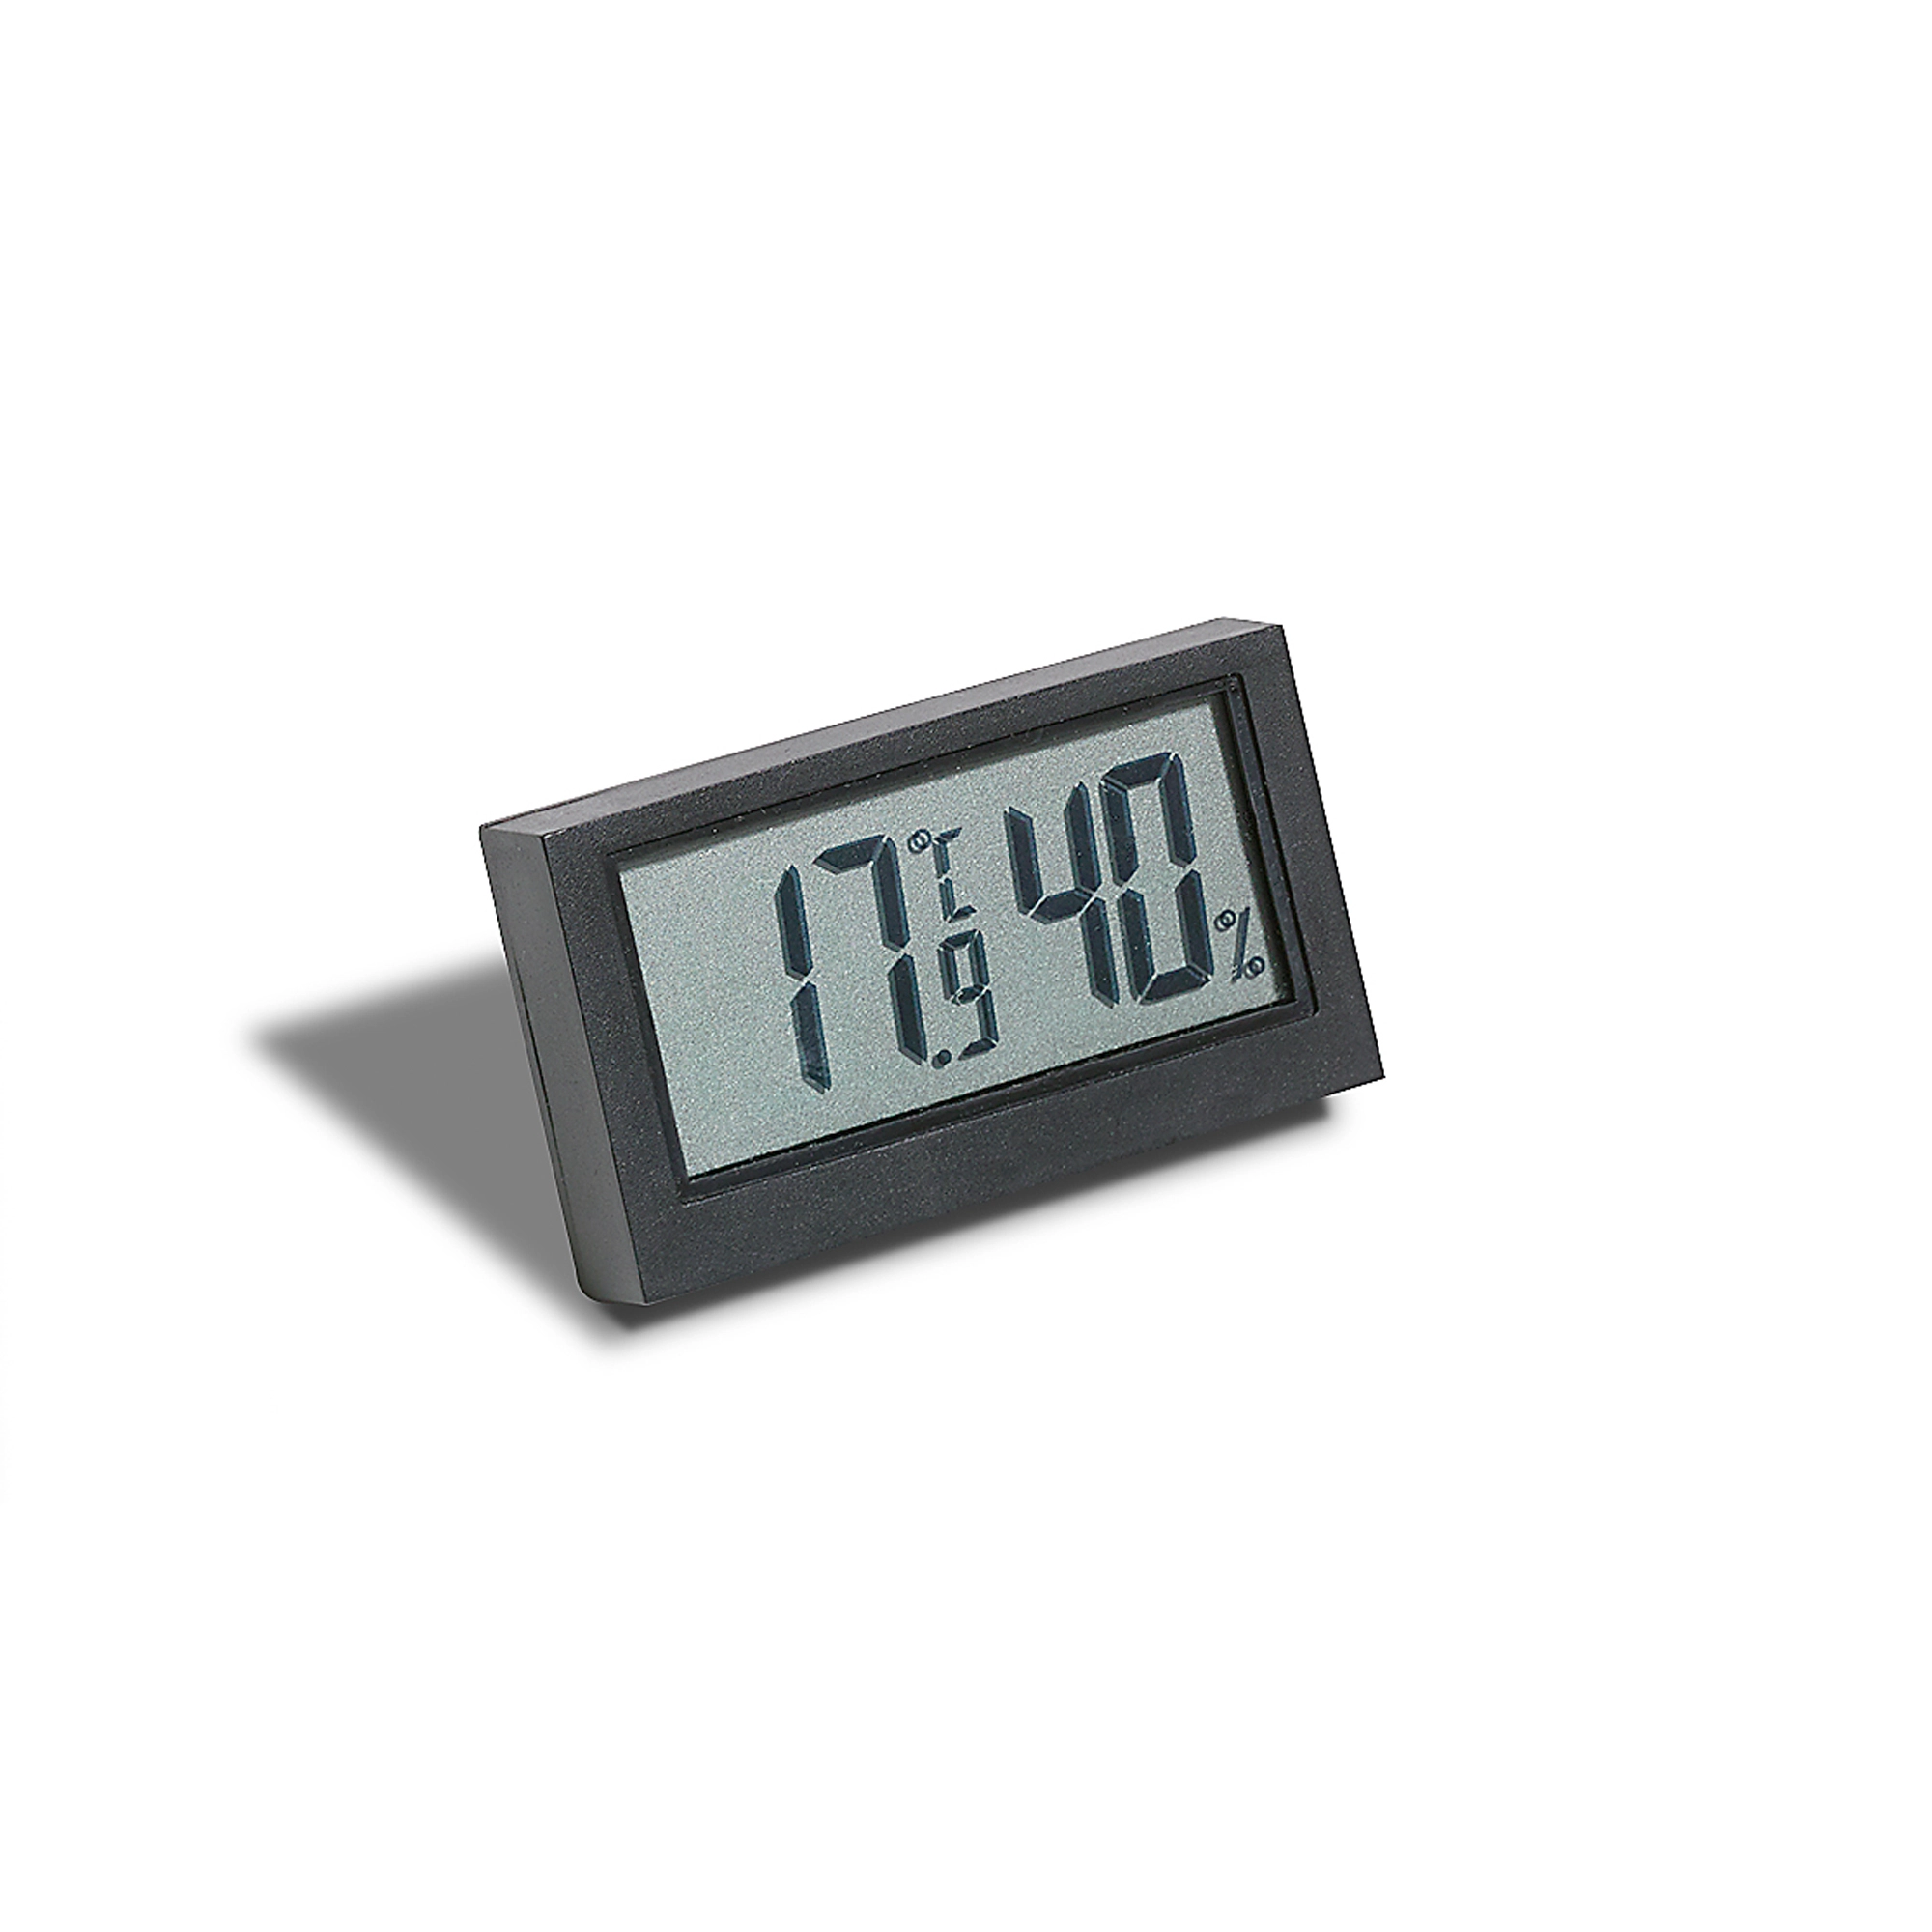 Möller Therm Thermo- / Hygrometer digital 3,2 cm kaufen bei OBI